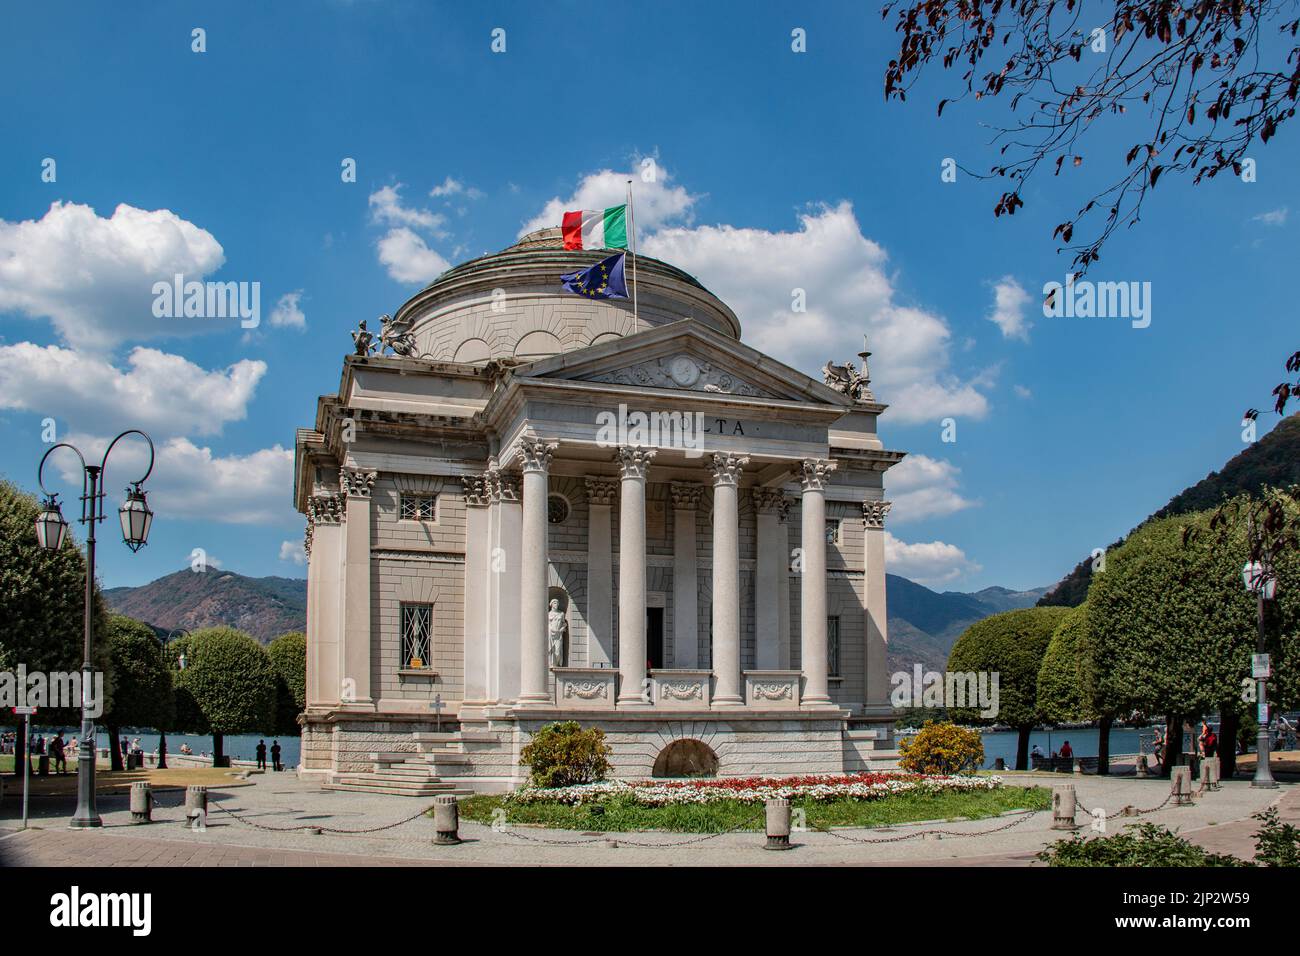 Tempio Voltiano - an Italian scientific museum - located in Como, on the shores of Lake Como, Lombardie, Italy Stock Photo